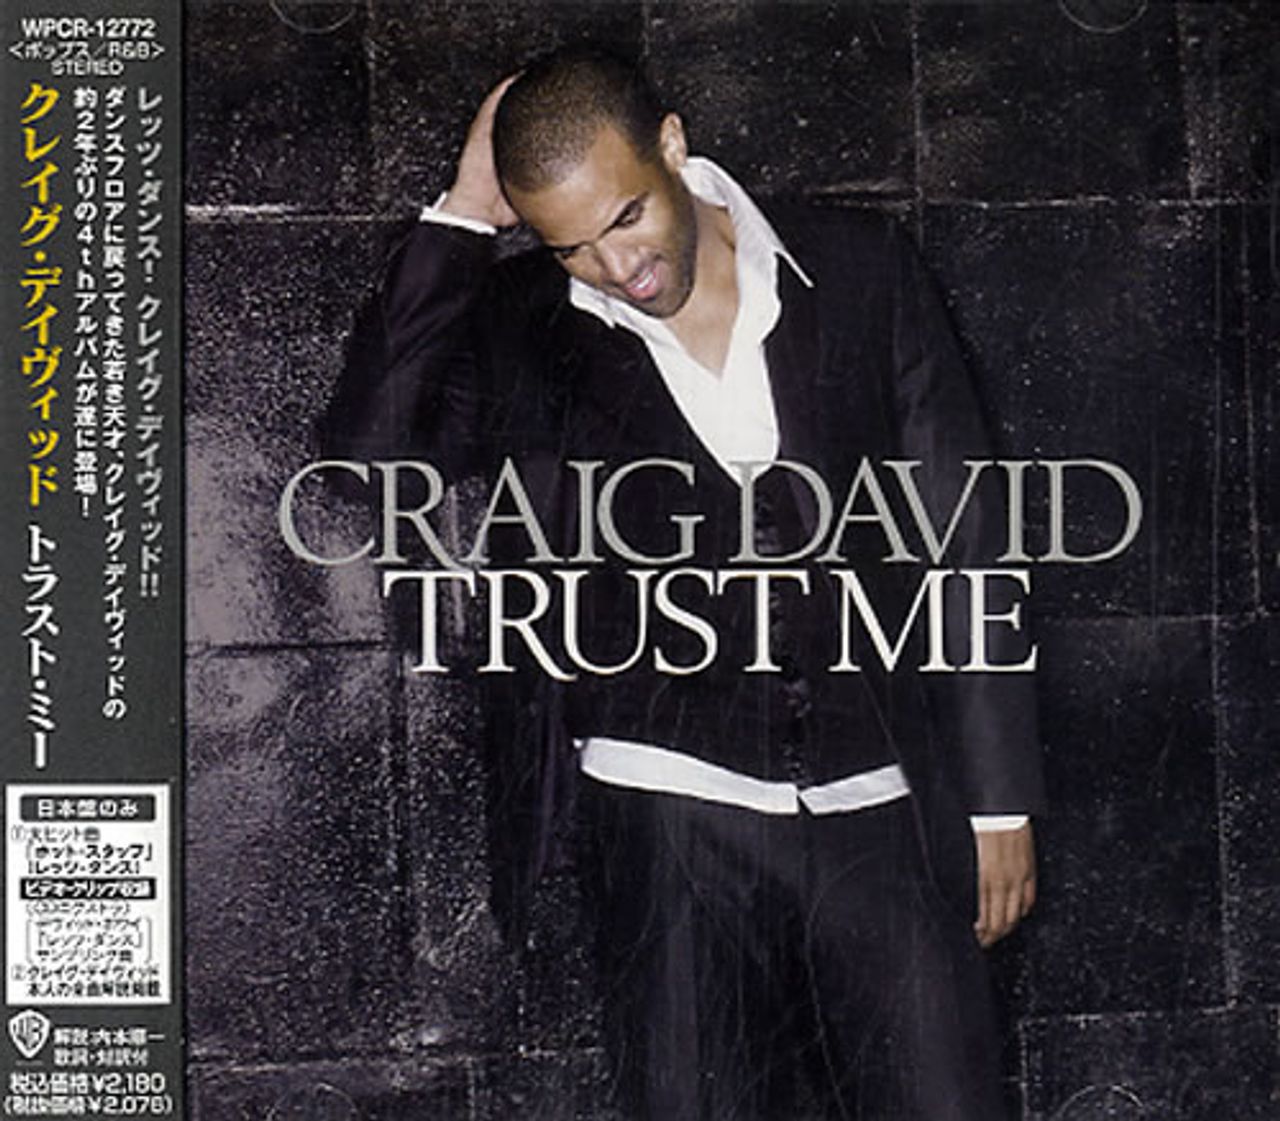 Craig David Trust Me Japanese Promo CD album (CDLP) WPCR-12772